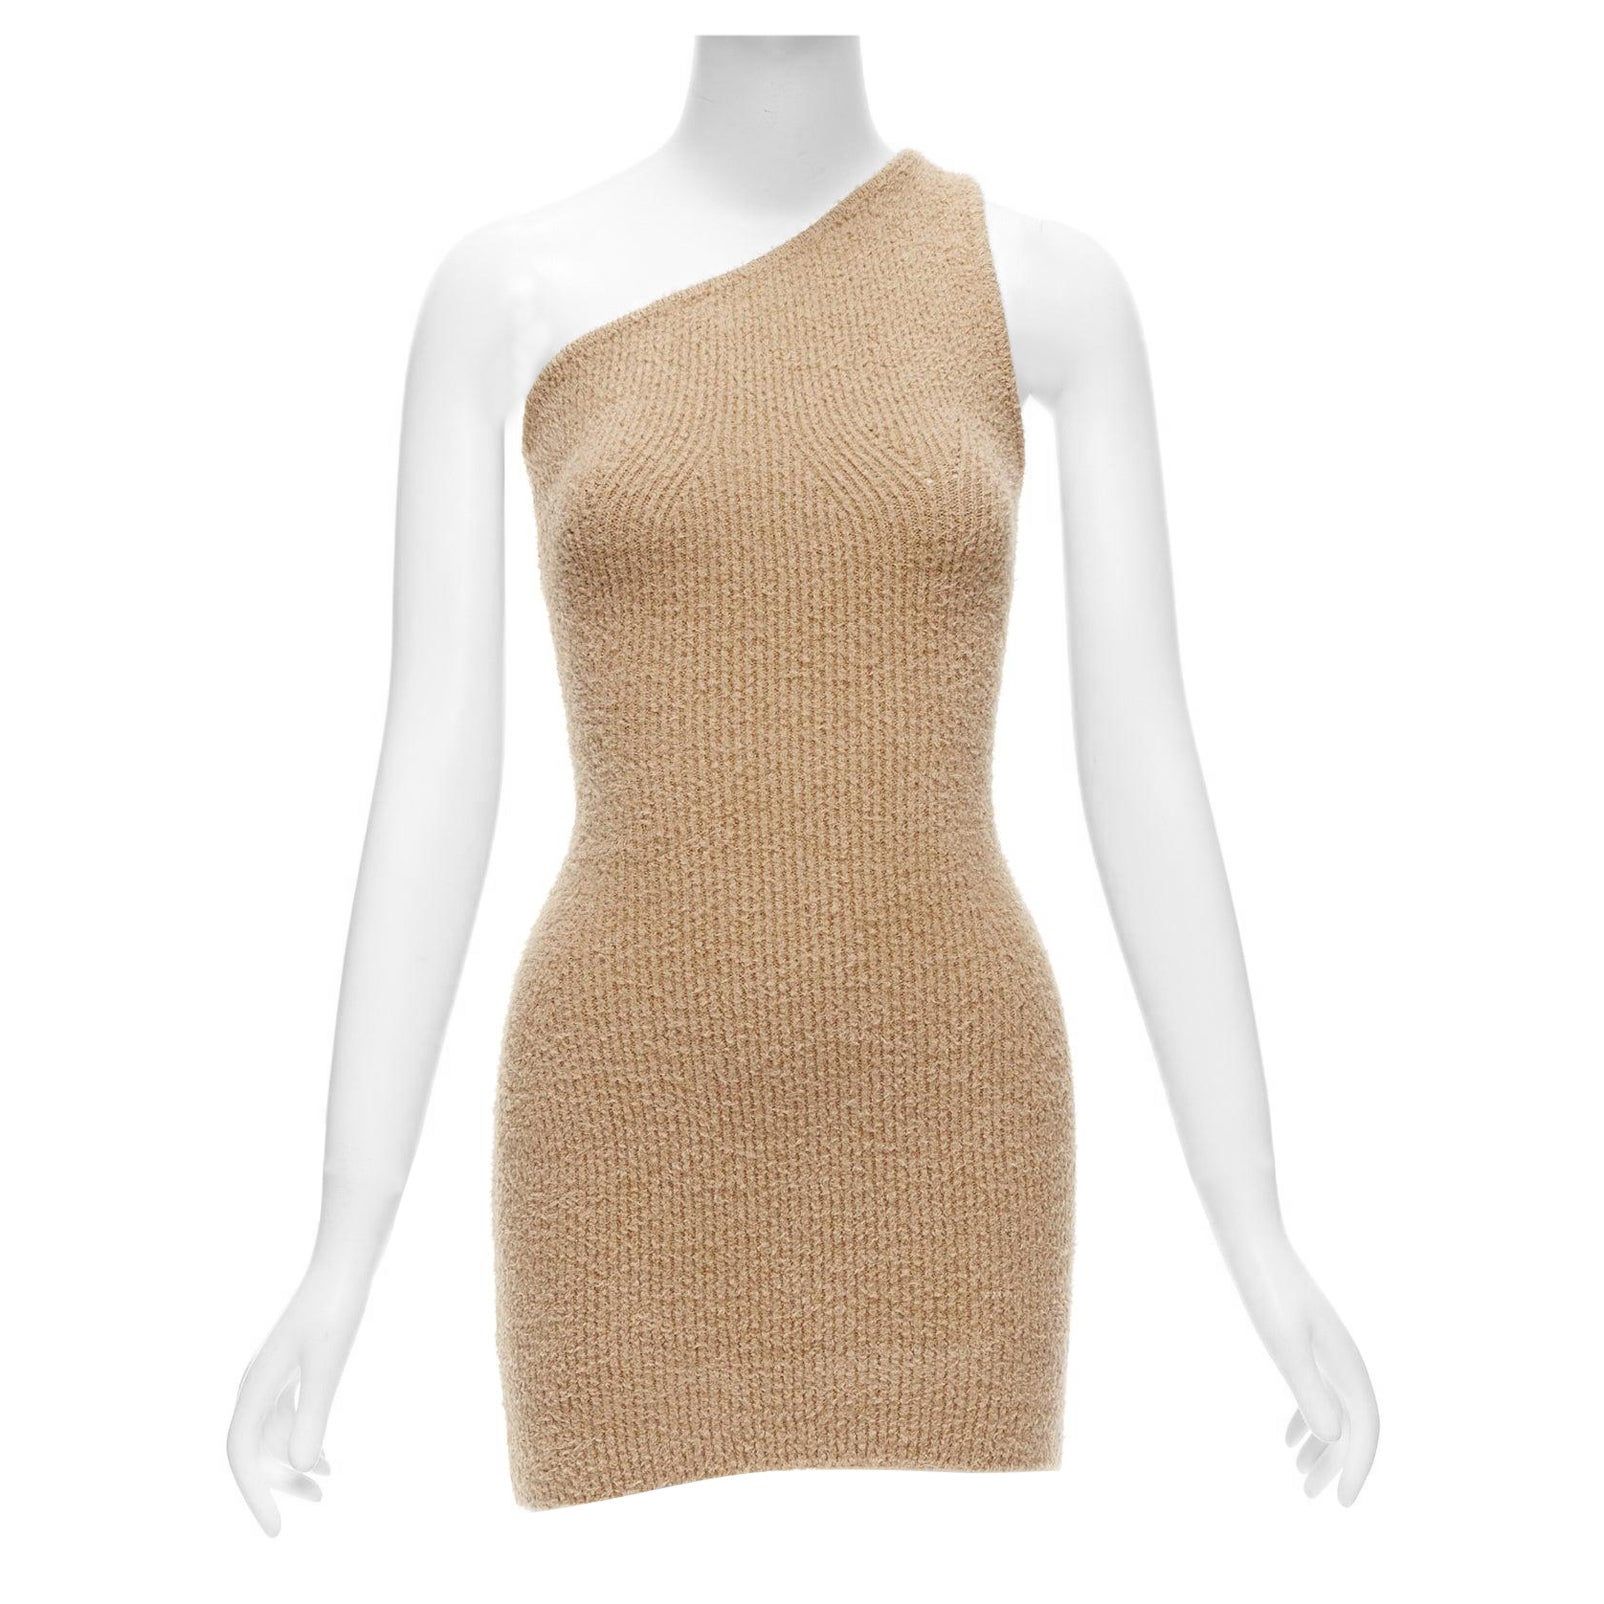 WARDROBE NYC HAILEY BIEBER HB tan fuzzy knit cotton one shoulder mini dress S For Sale